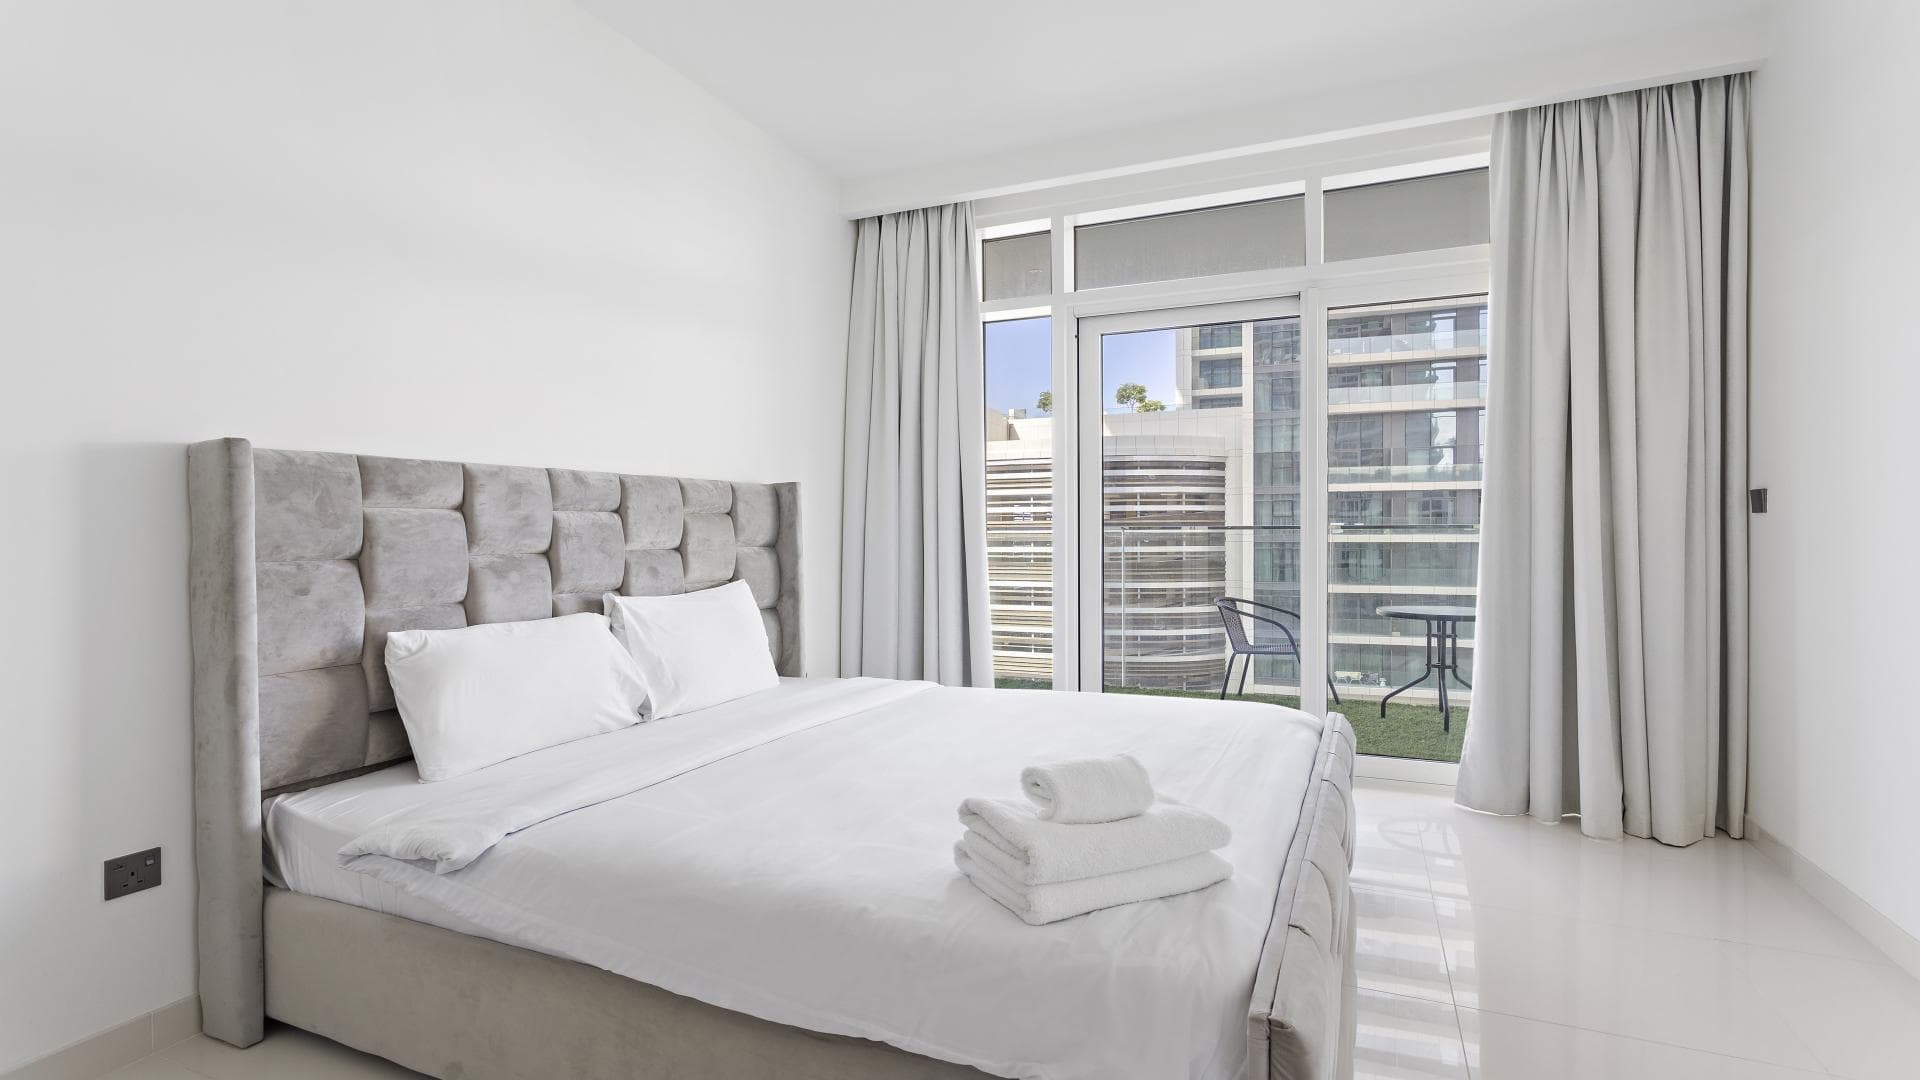 2 Bedroom Apartment For Rent Redwood Park Lp36541 7ee1b056f9192c0.jpg